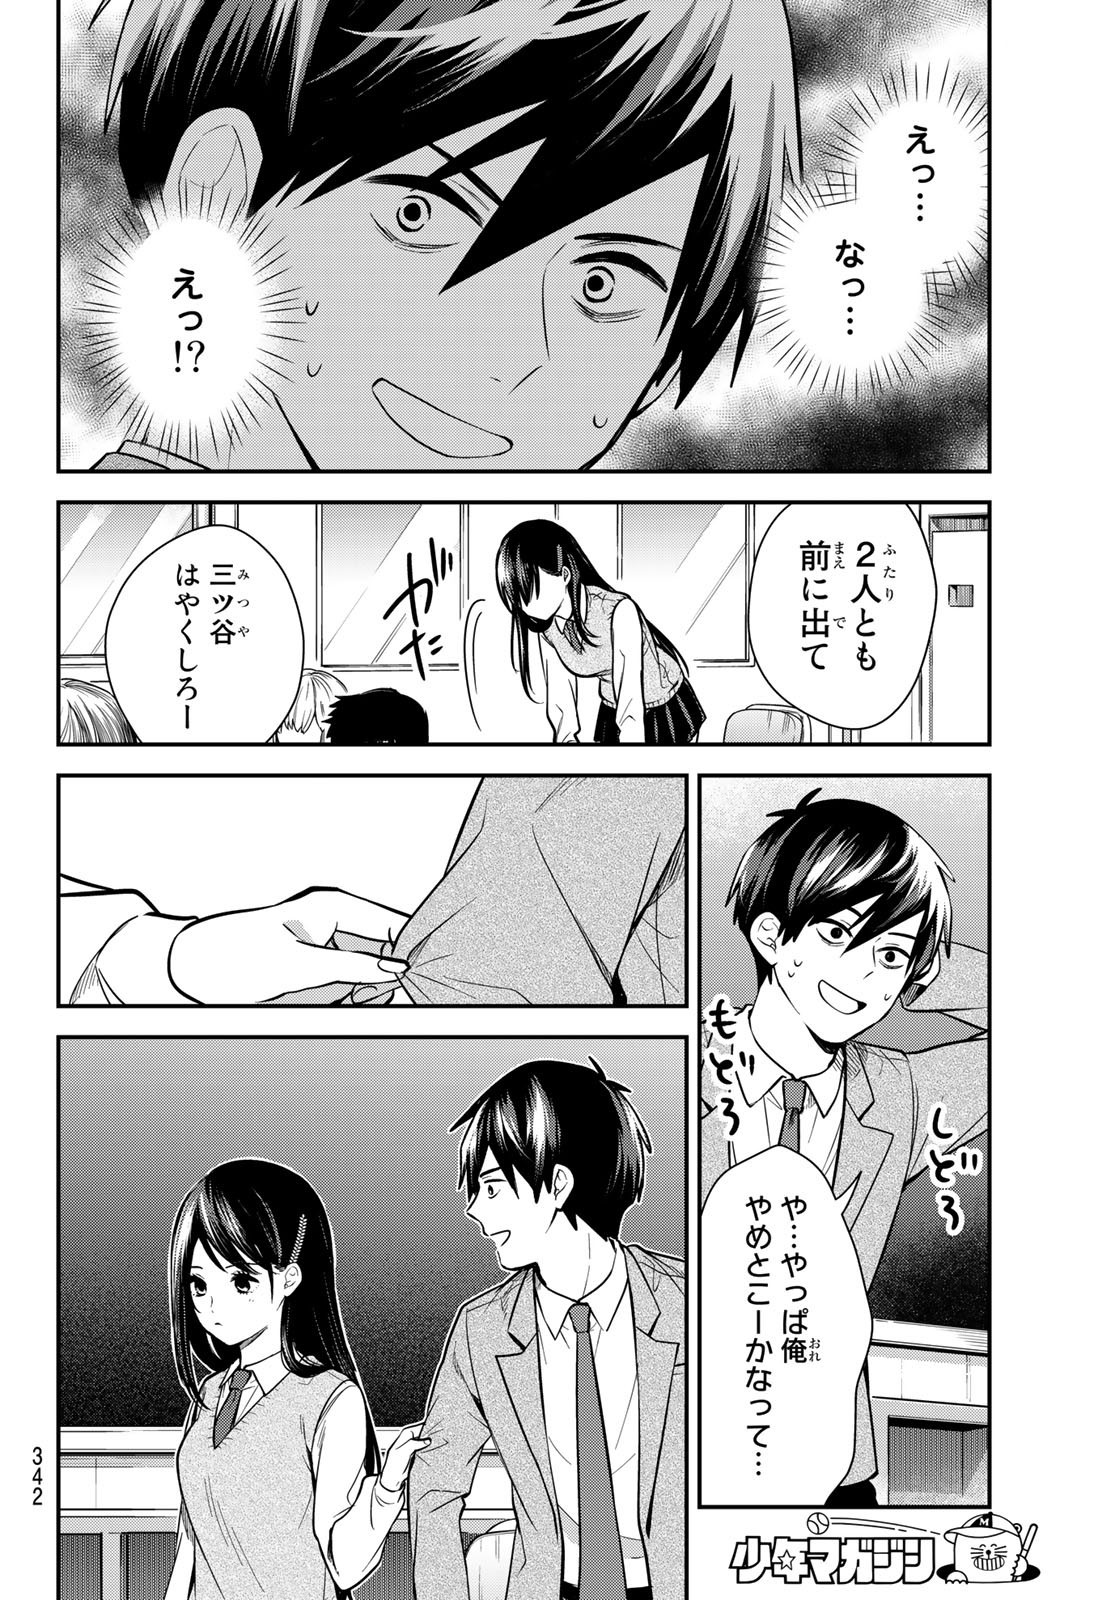 Kimi ga Megami Nara Ii no ni (I Wish You Were My Muse) - Chapter 013 - Page 18